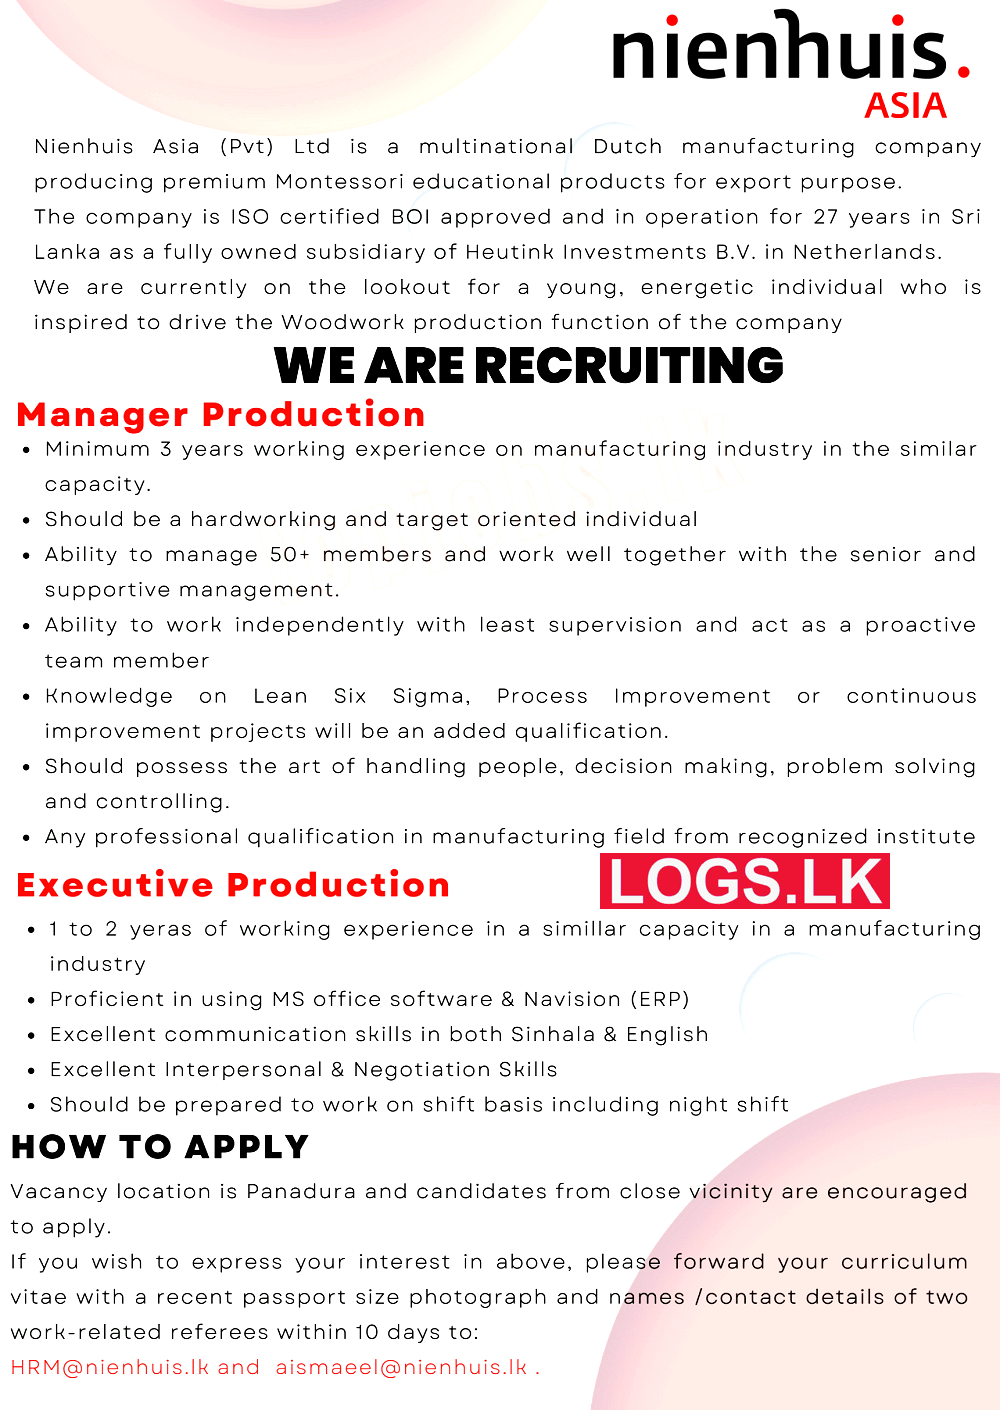 Manager / Executive (Production) Job Vacancy at Nienhuis Asia Job Vacancies